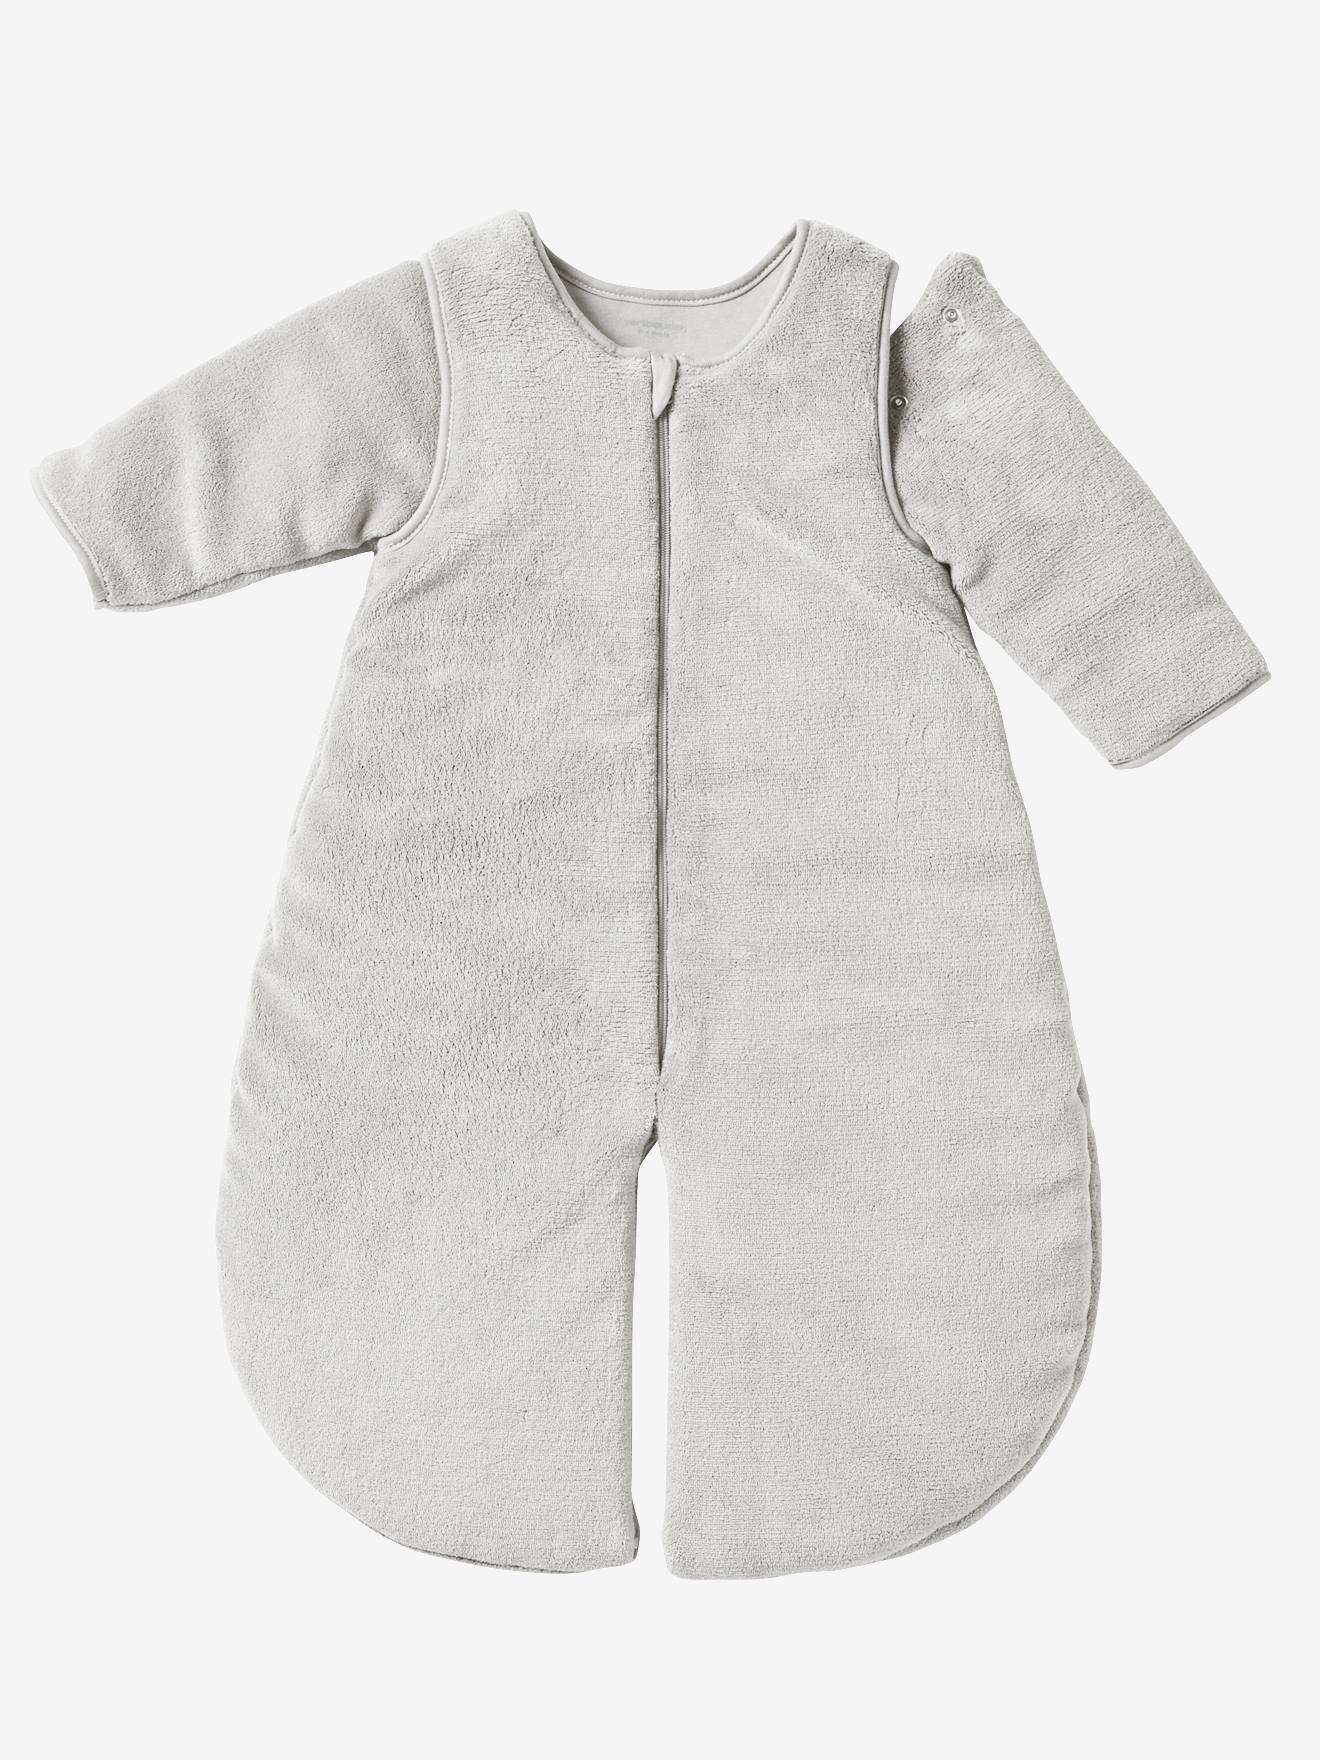 Baby Säuglingswickel Wickeldecken Schlafsack für 0-6 Monate Baumwolle DE 